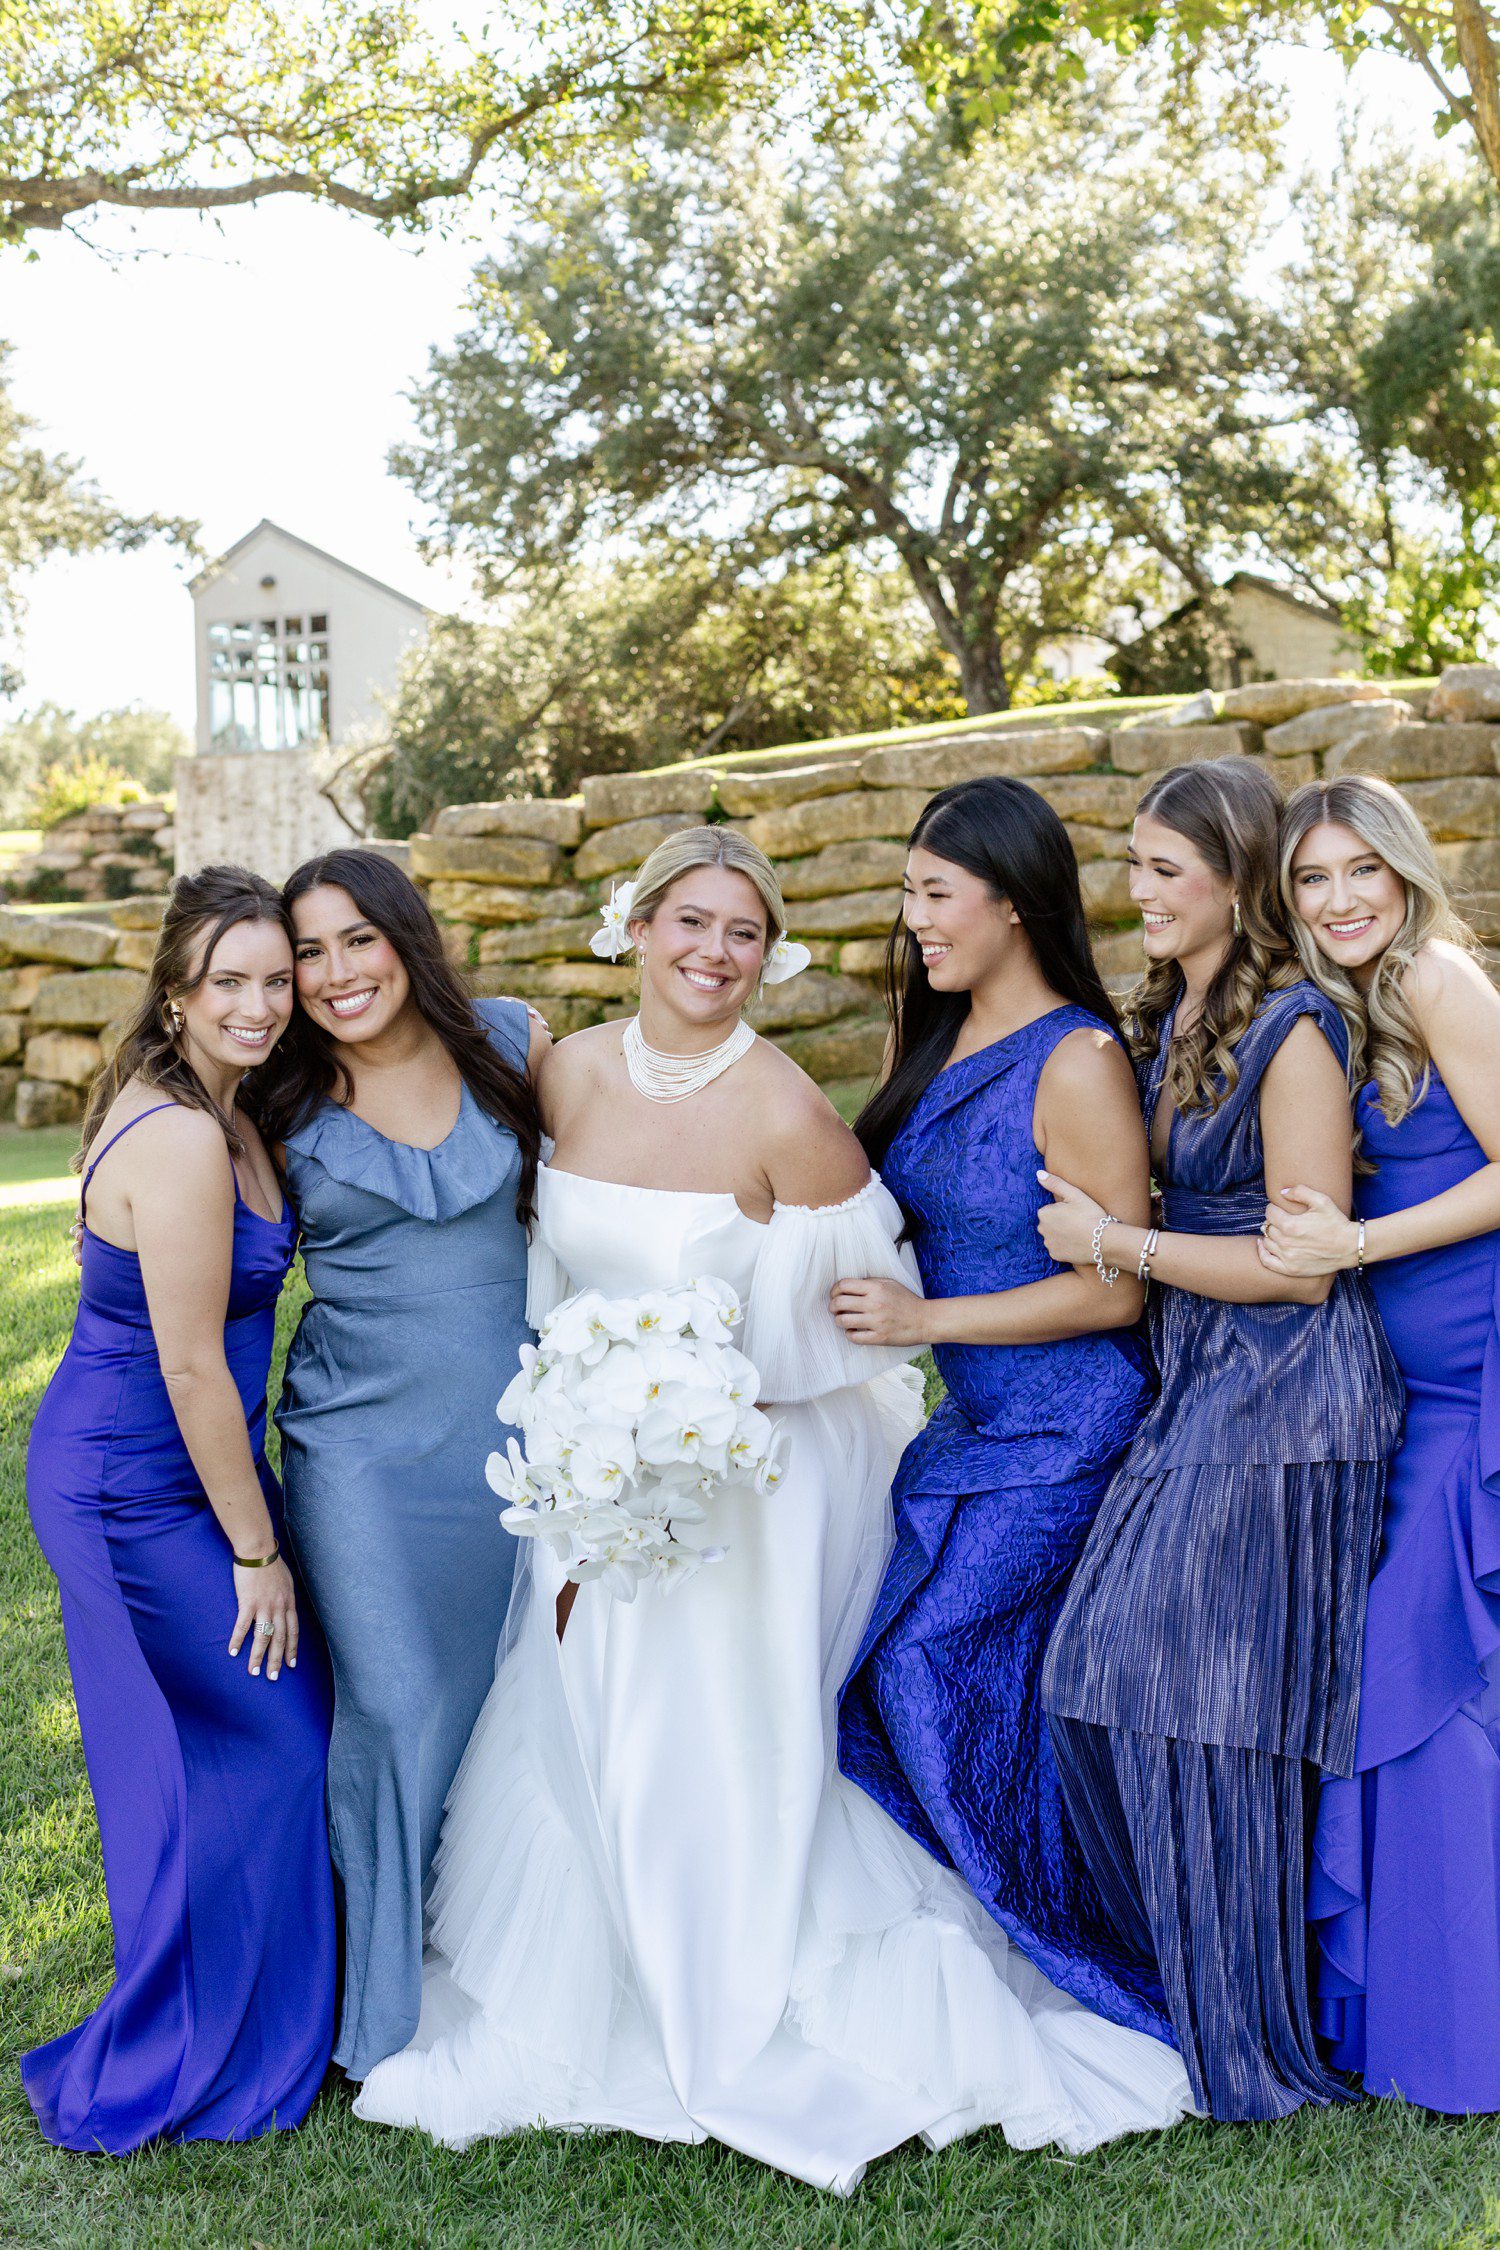 Bride with bridesmaids in blue bridesmaid dresses.